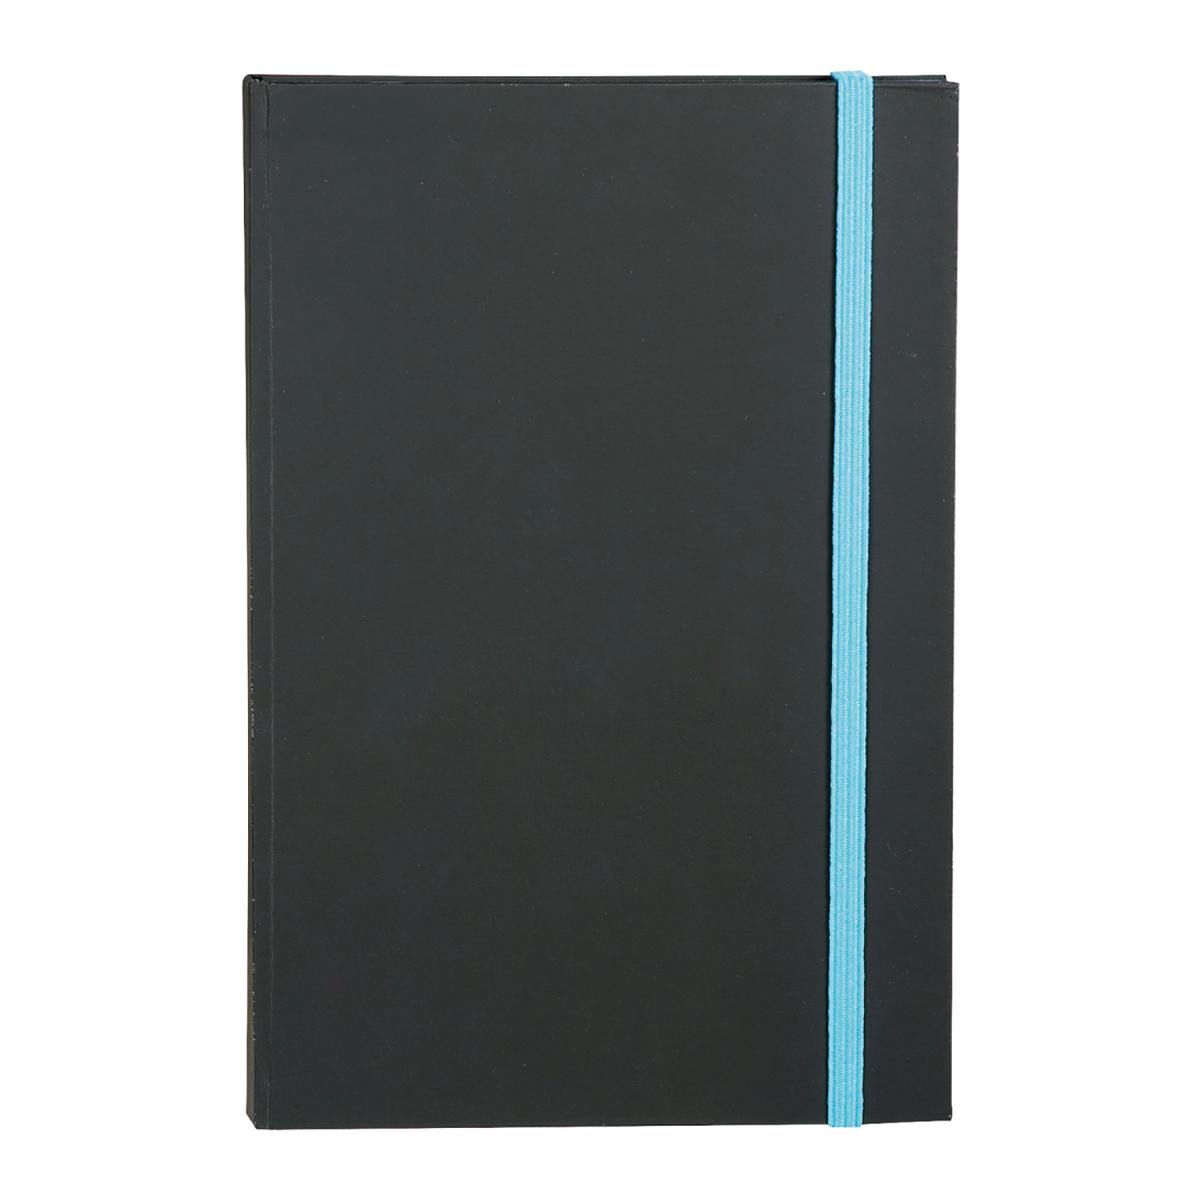 Image for 5.5" x 8.5" Color Pop Bound JournalBook